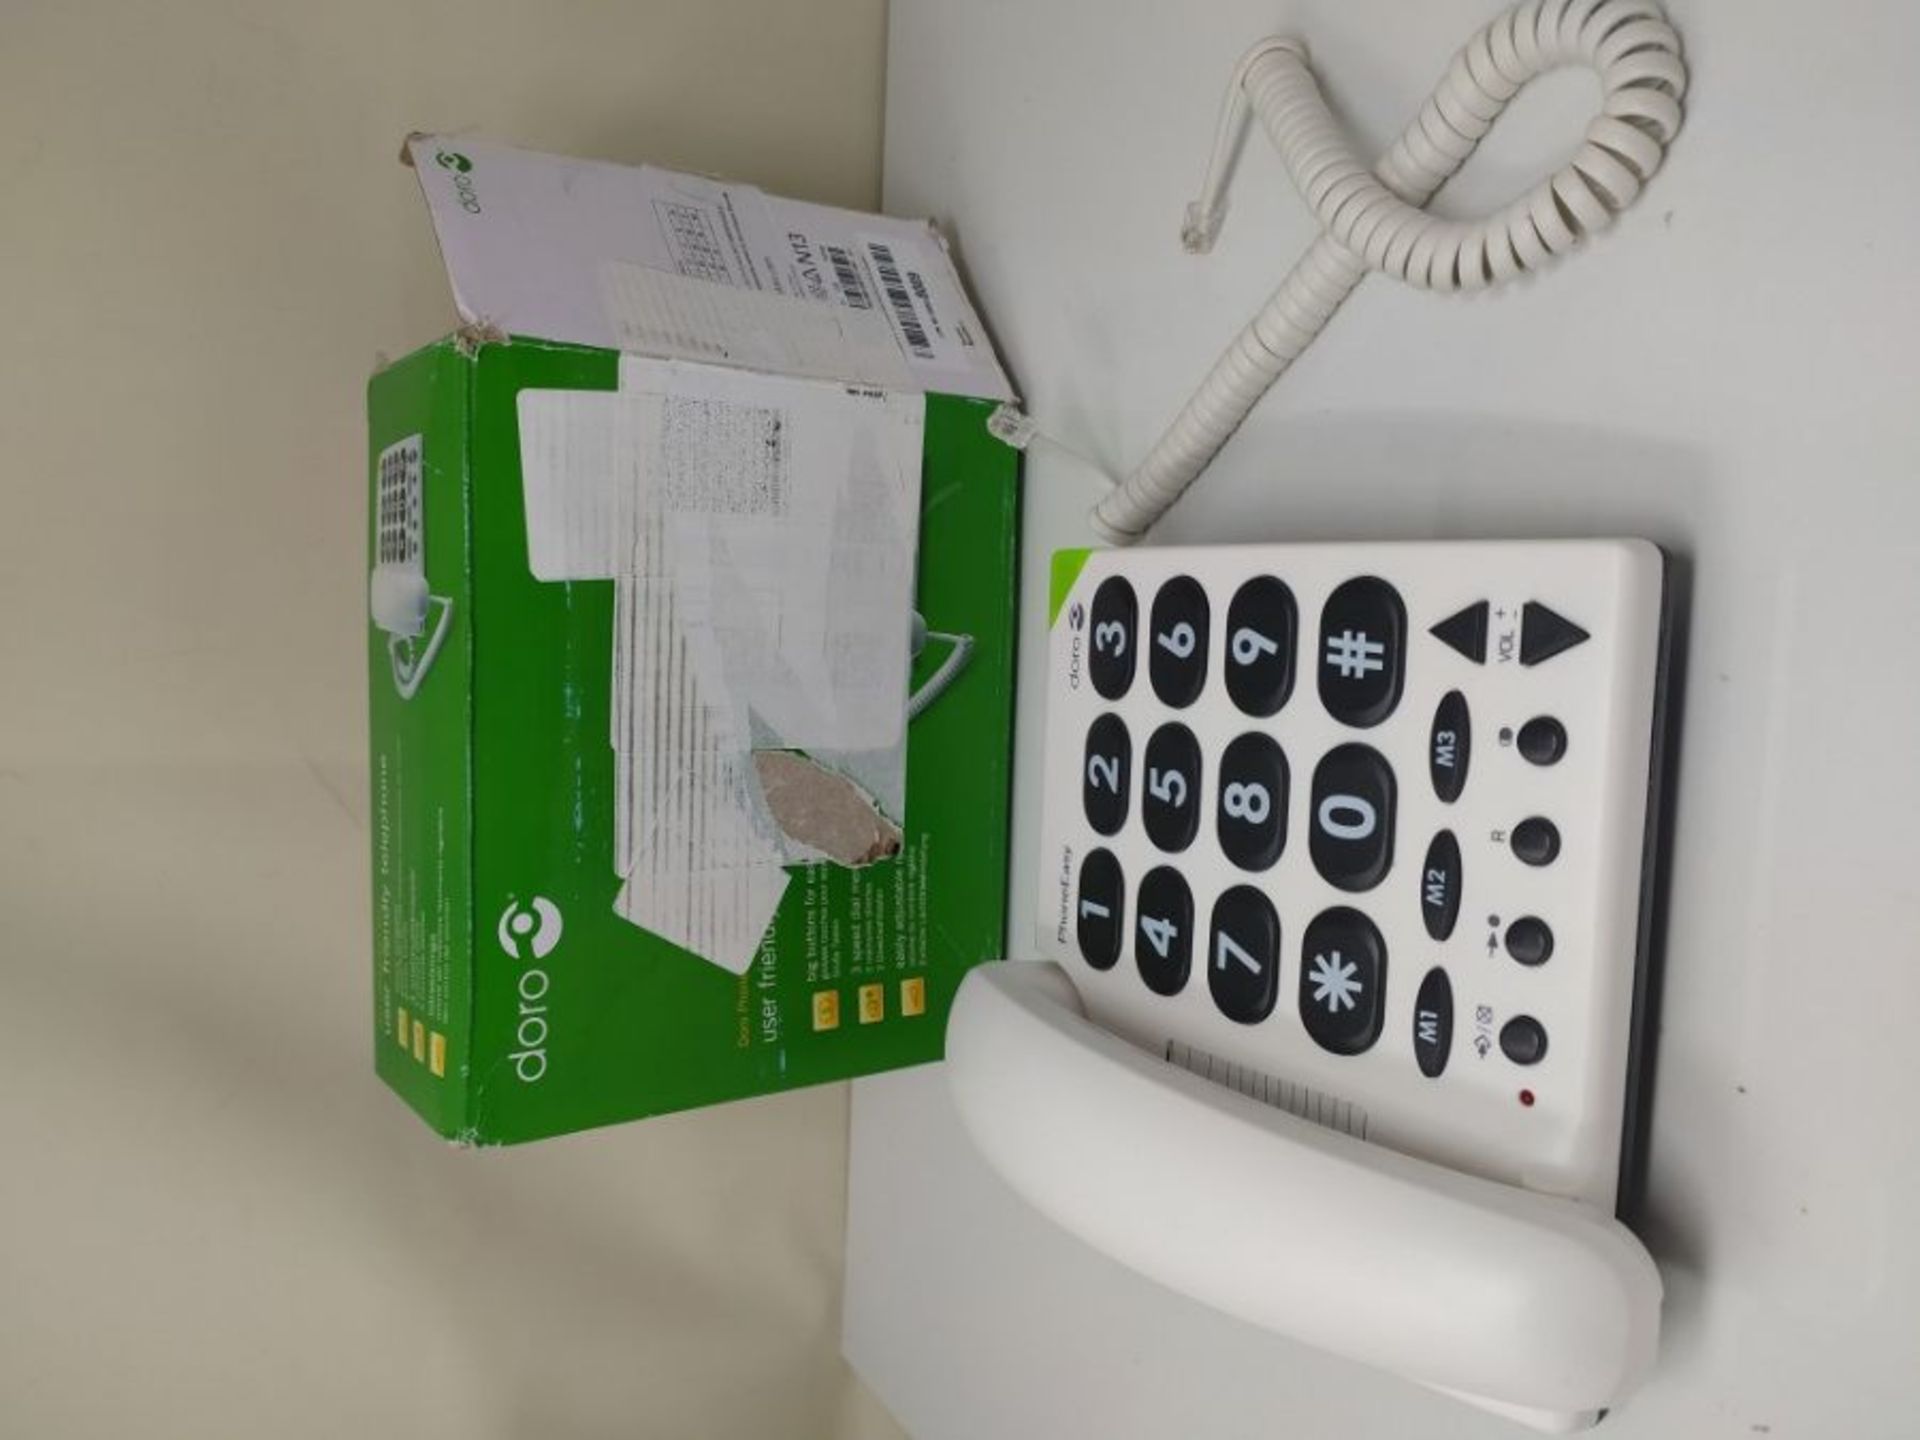 Doro PhoneEasy 311c Big Button Corded Telephone for Seniors (White) - Image 2 of 2